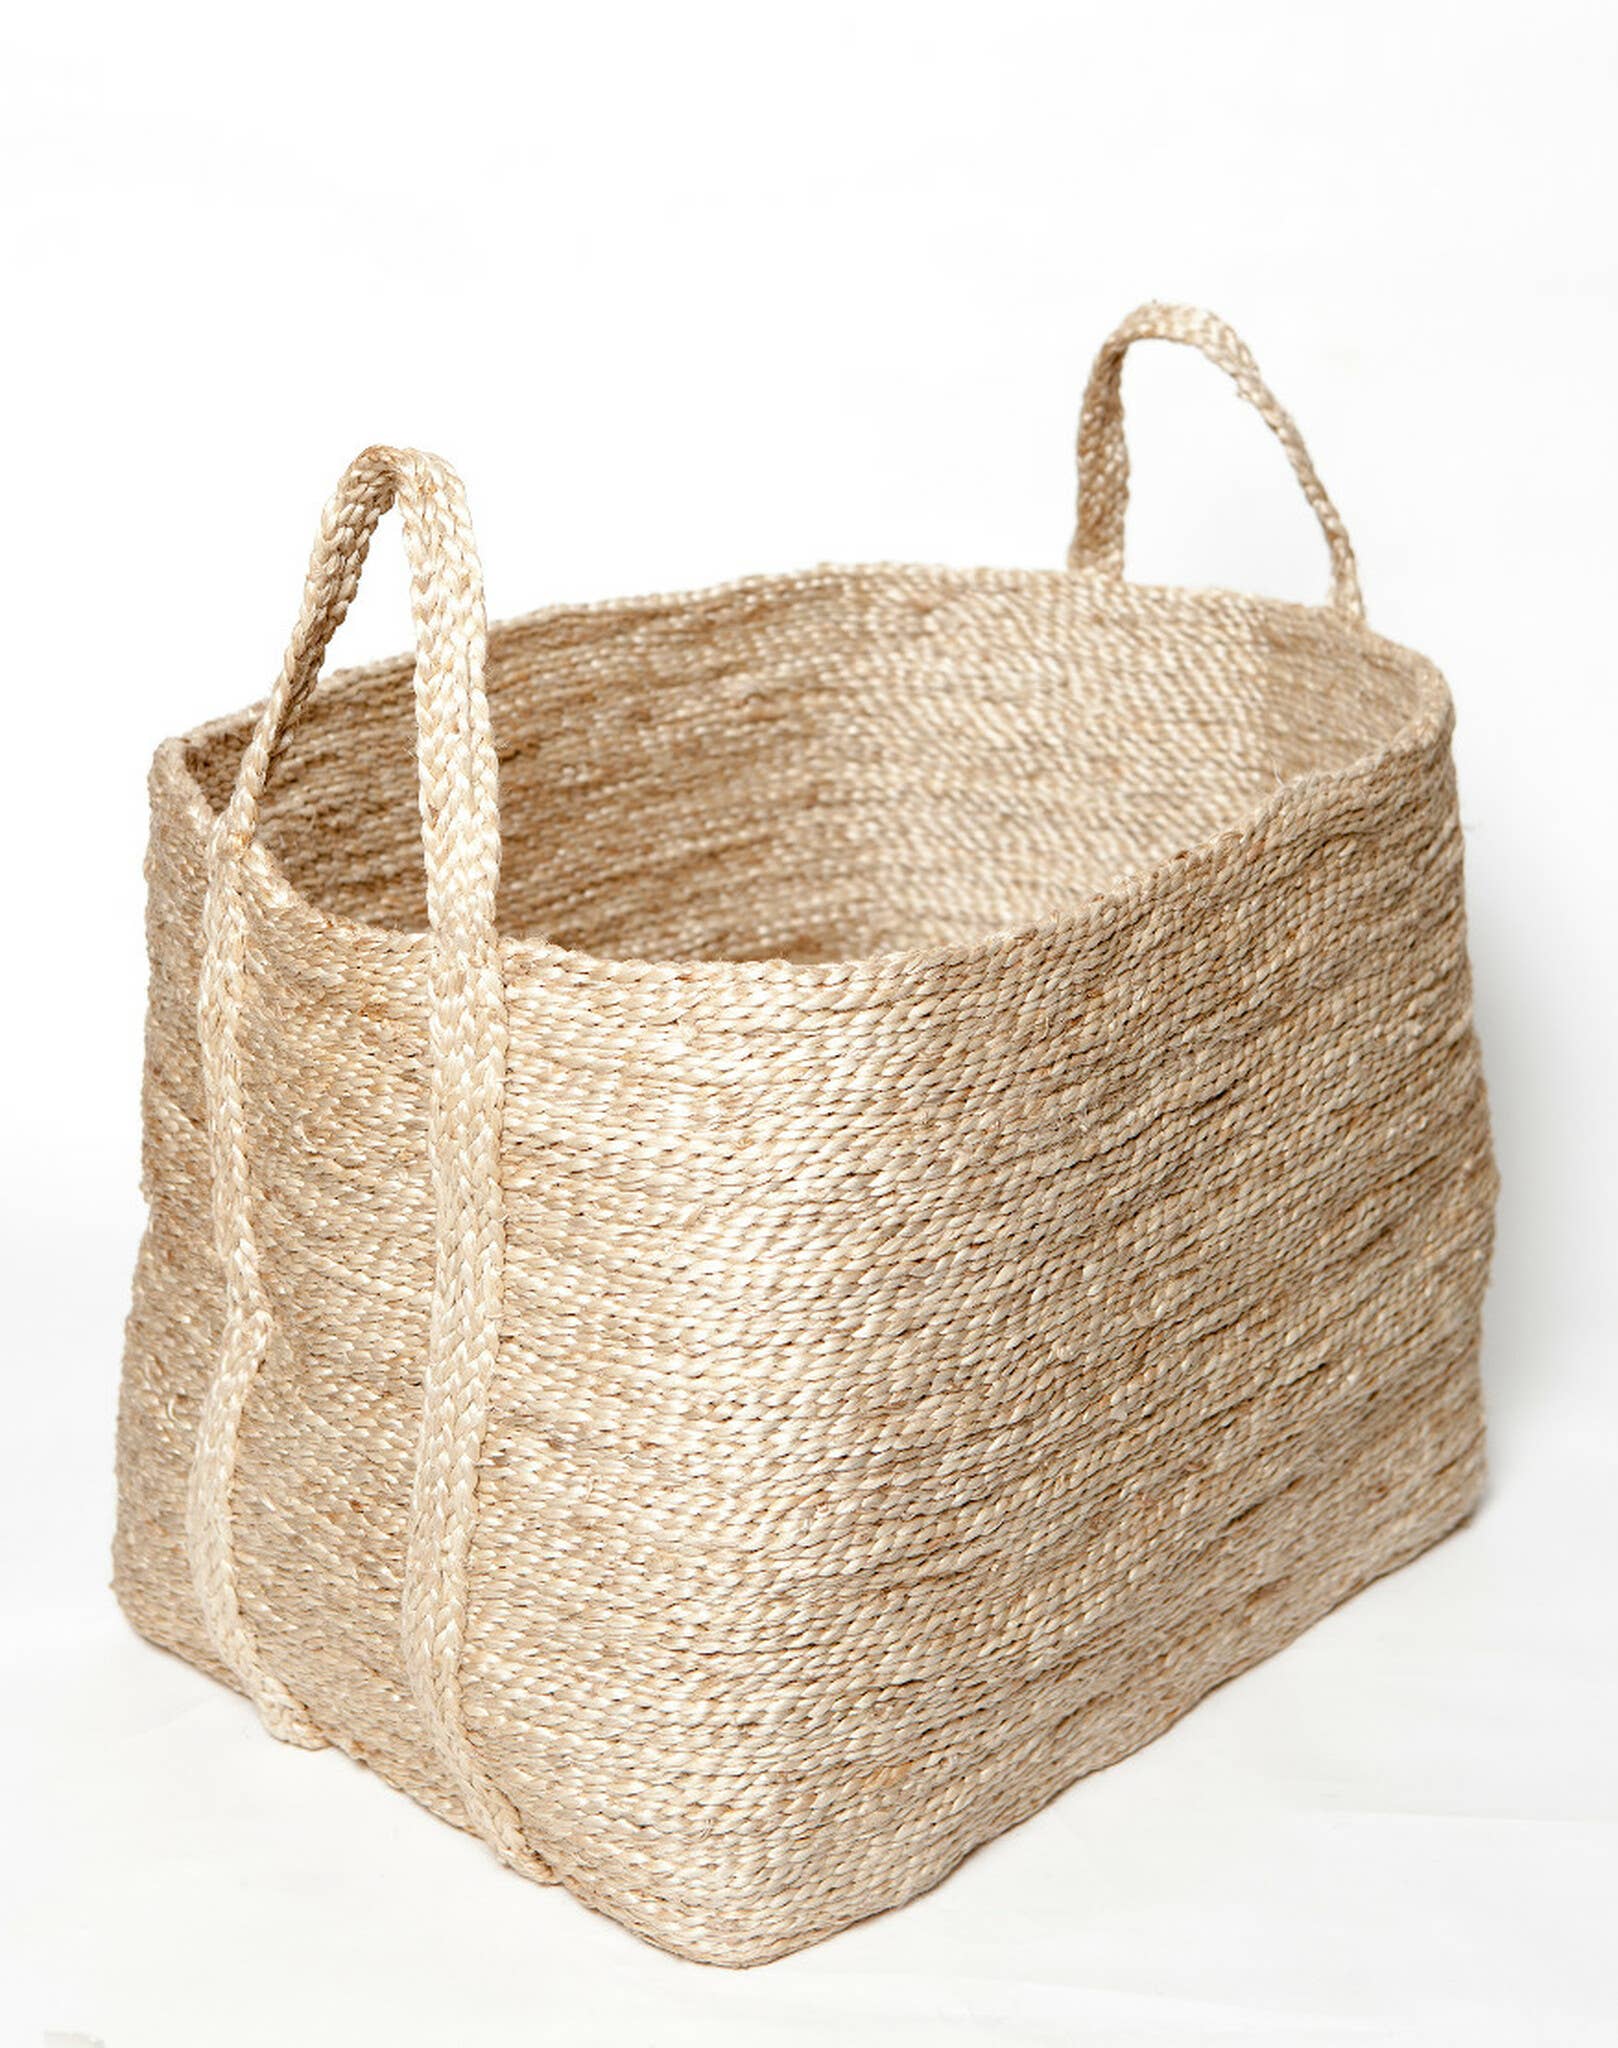 Storage Basket Natural Jute basket/pflanzkorb/Laundry Basket with Handles 